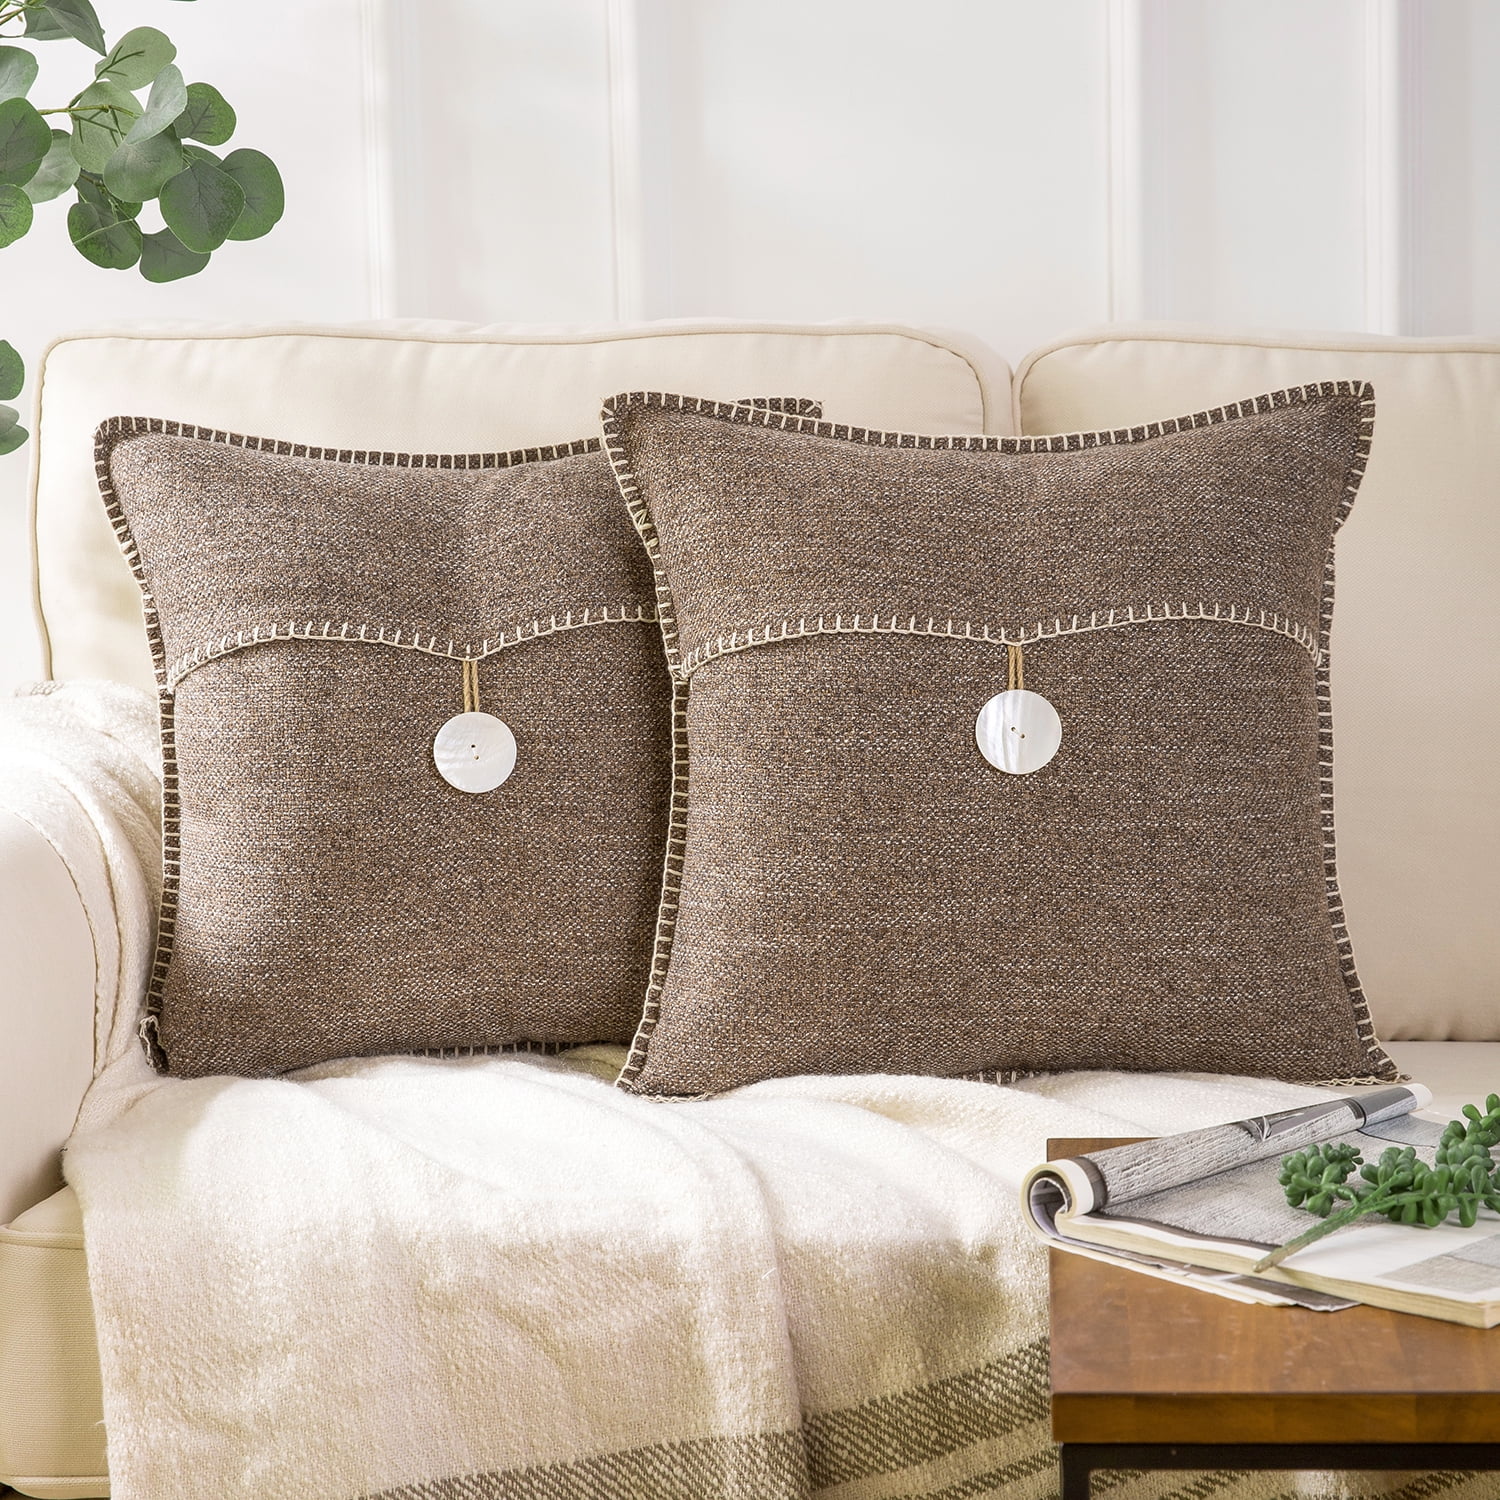 Phantoscope Single Button Series Linen Decorative Throw Pillow, 18 inchx18 inch, Beige, 2 Pack, Size: 18 inch x 18 inch